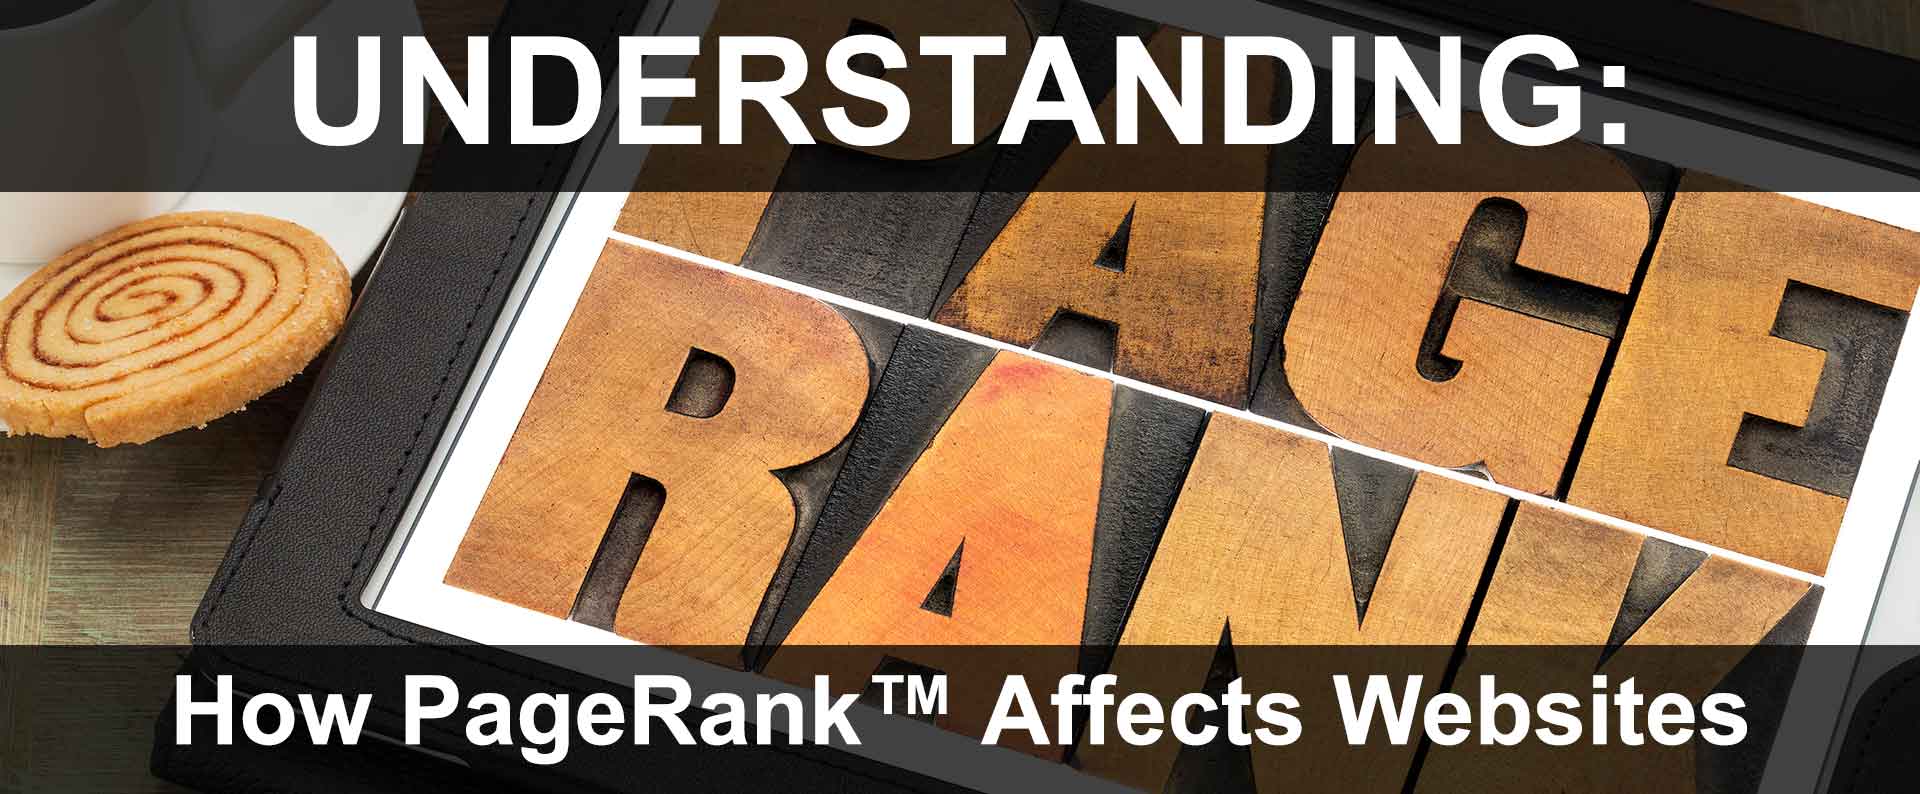 Understanding How PageRank™ Affects Websites